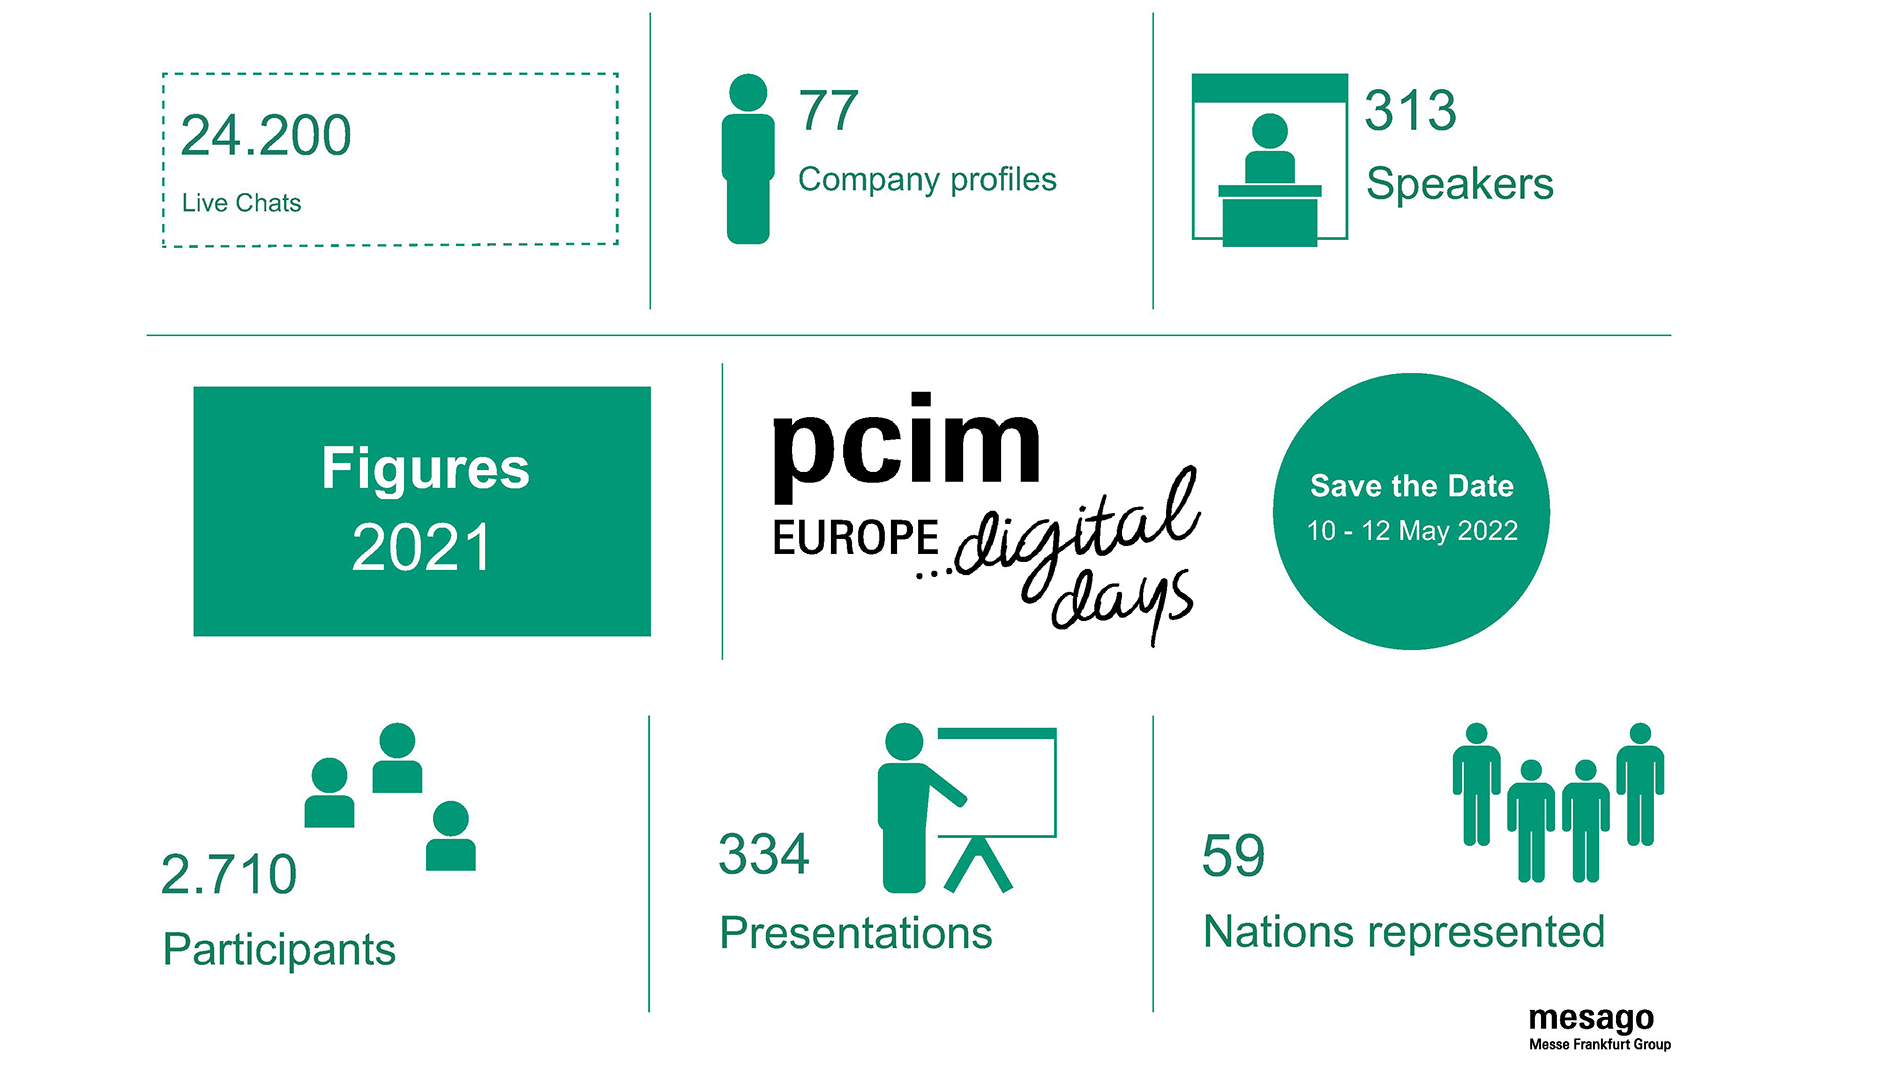 PCIM Europe digital days 2020 Infographic